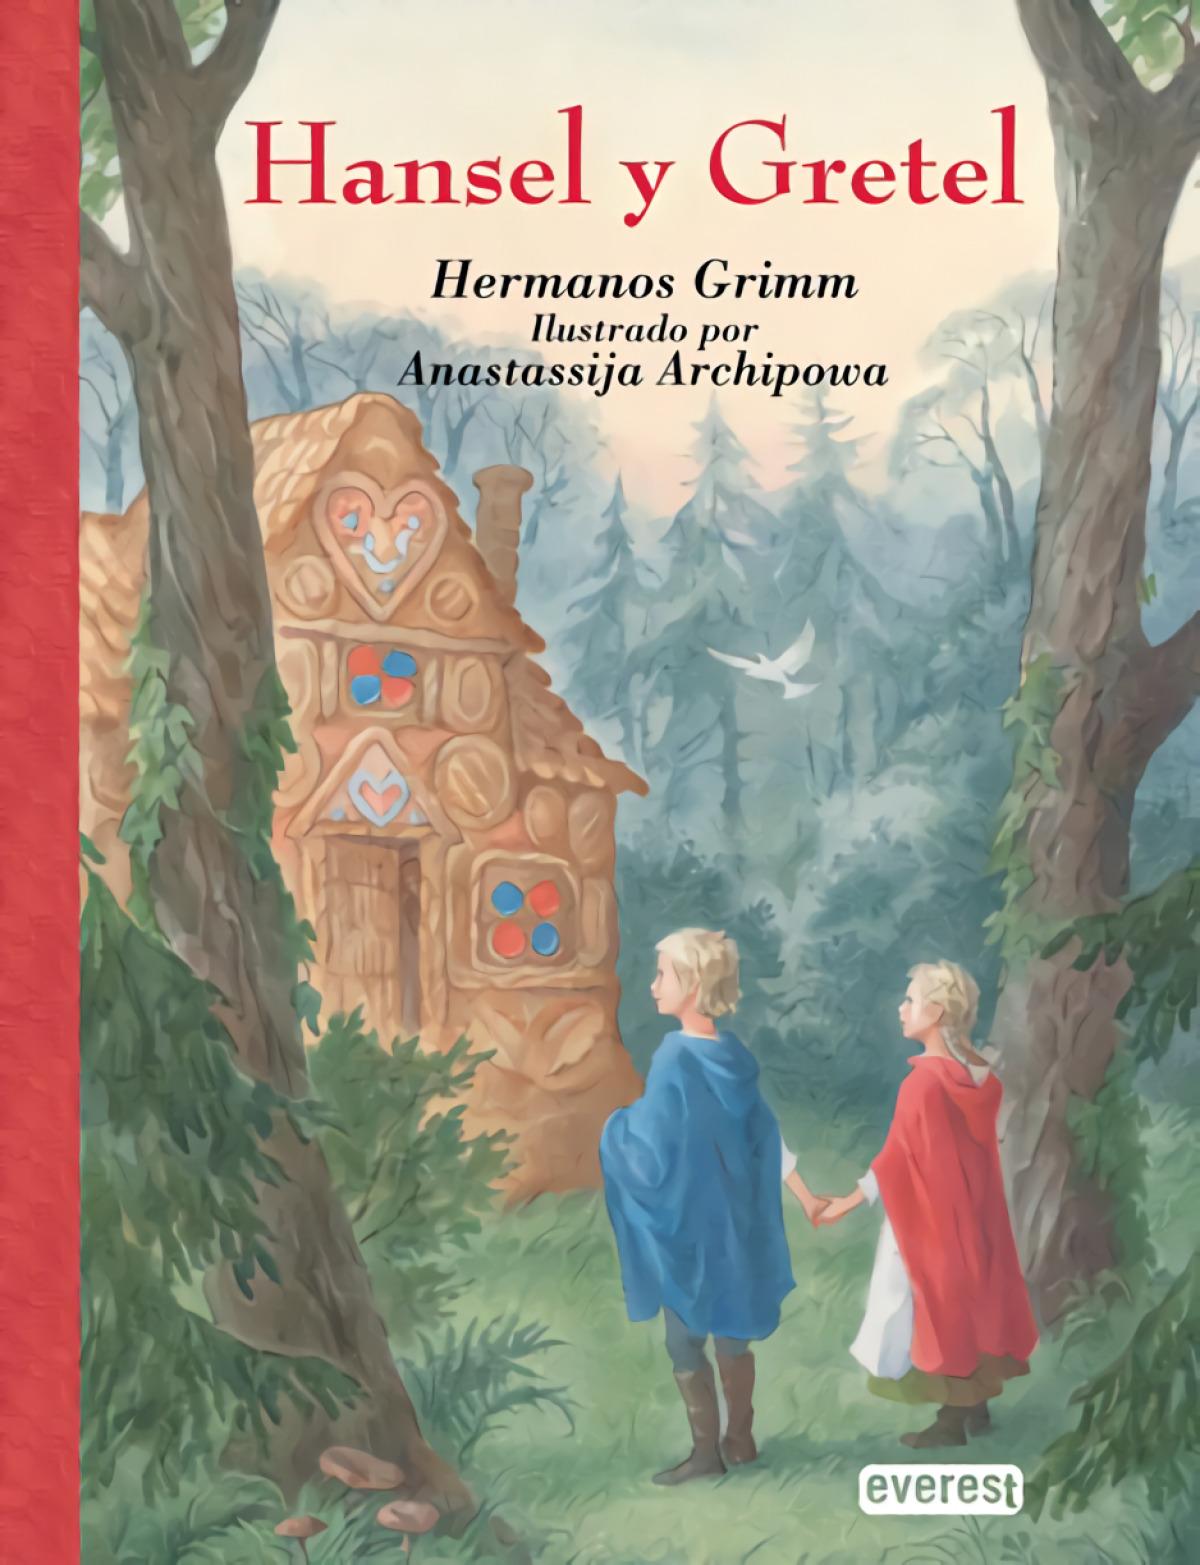 Hansel y Gretel HERMANOS GRIMM - Jacob Grimm/Wilhelm Grimm